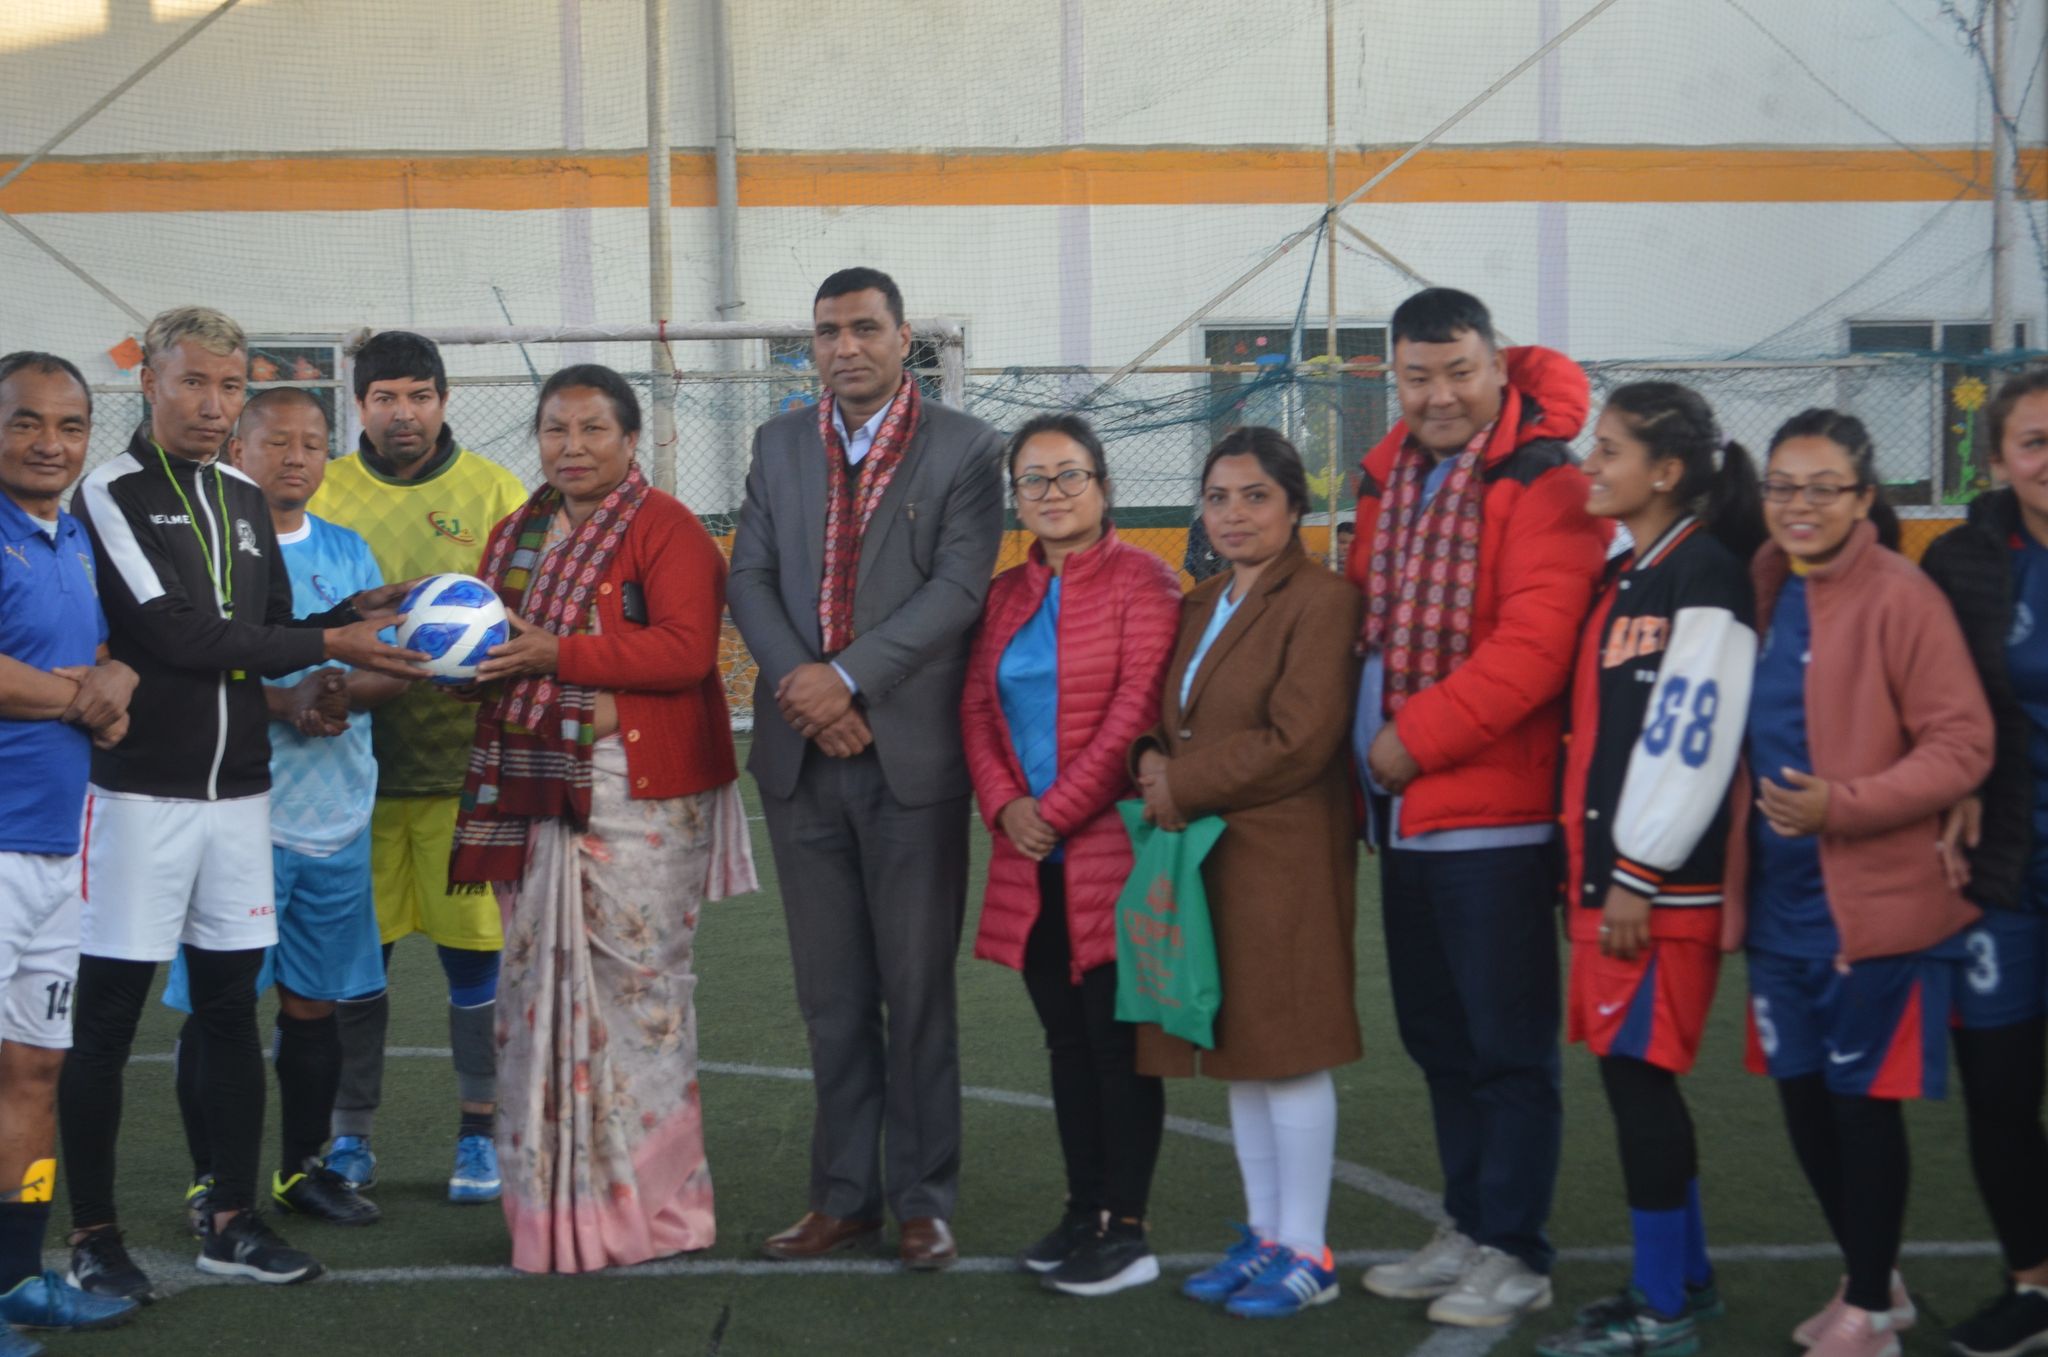 संस्थागत विद्यालय संघ नेपाल (इसान)  द्वारा आयोजित  तेस्रो इसान प्रिन्सिपल कप फुटसल प्रतियोगिता शुरु